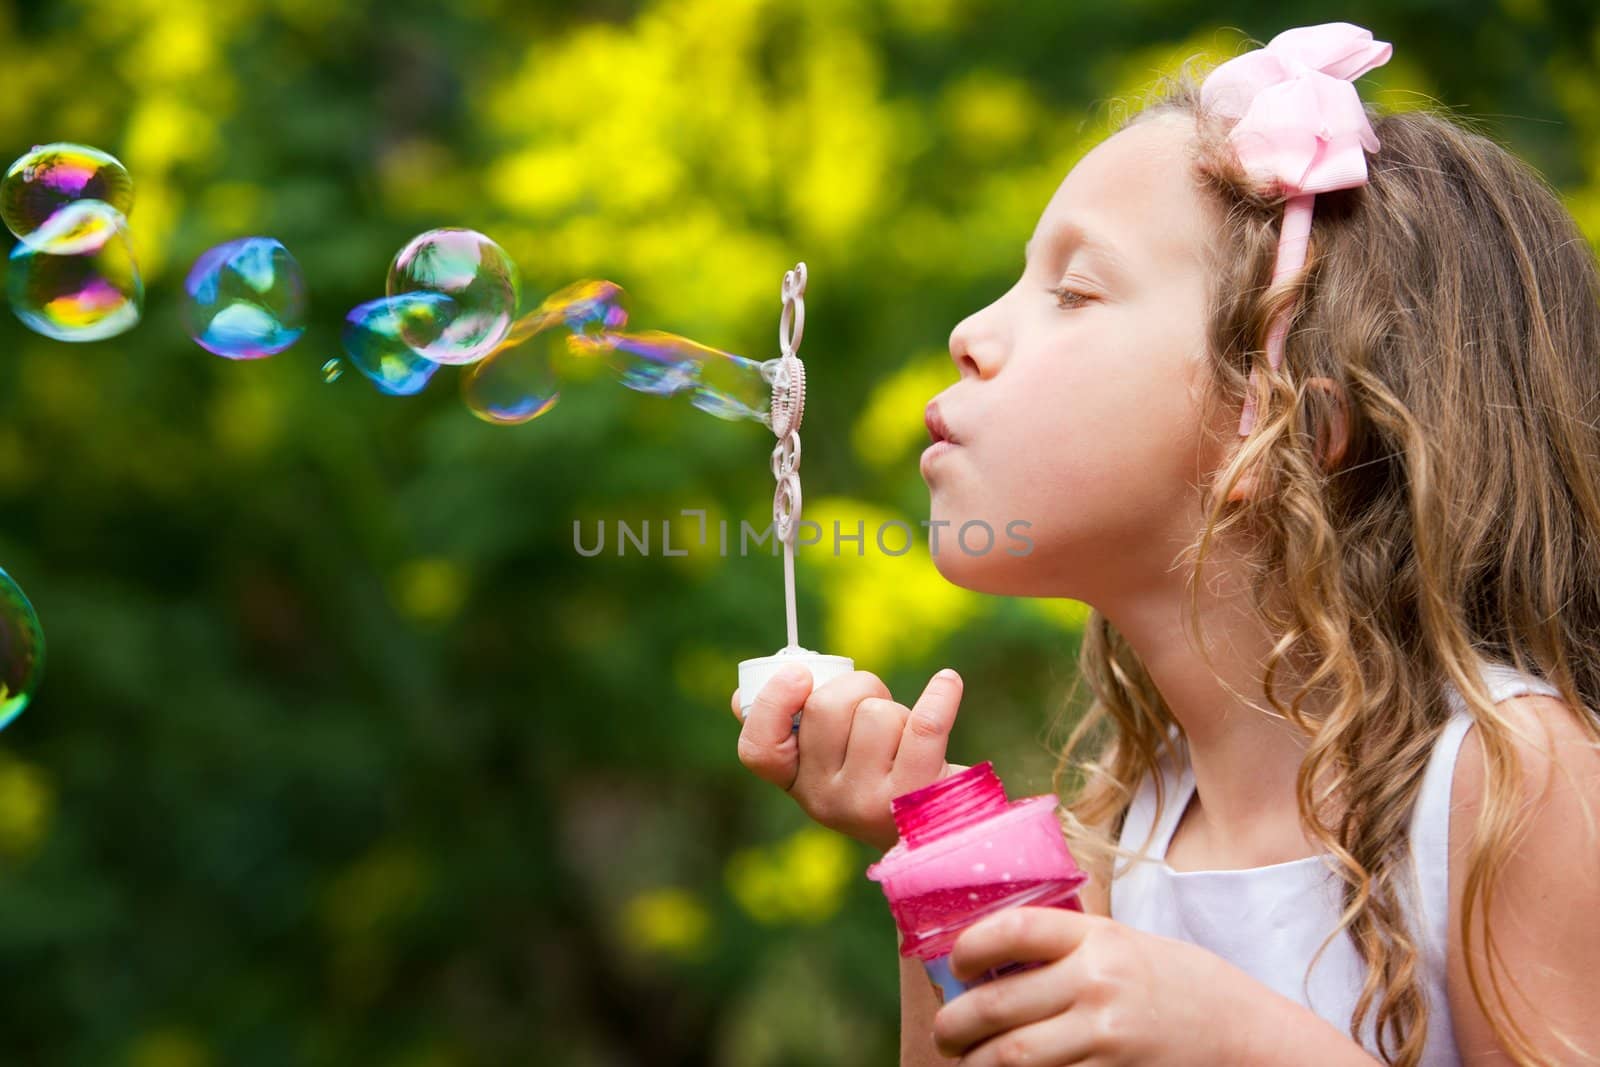 Close up portrait of cute little girl blowing bubbles in garden.